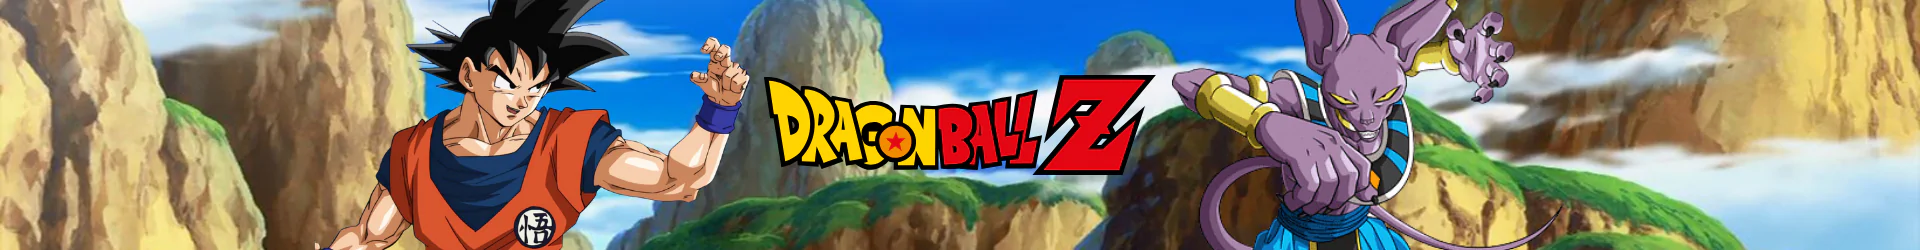 Dragon Ball replikák banner